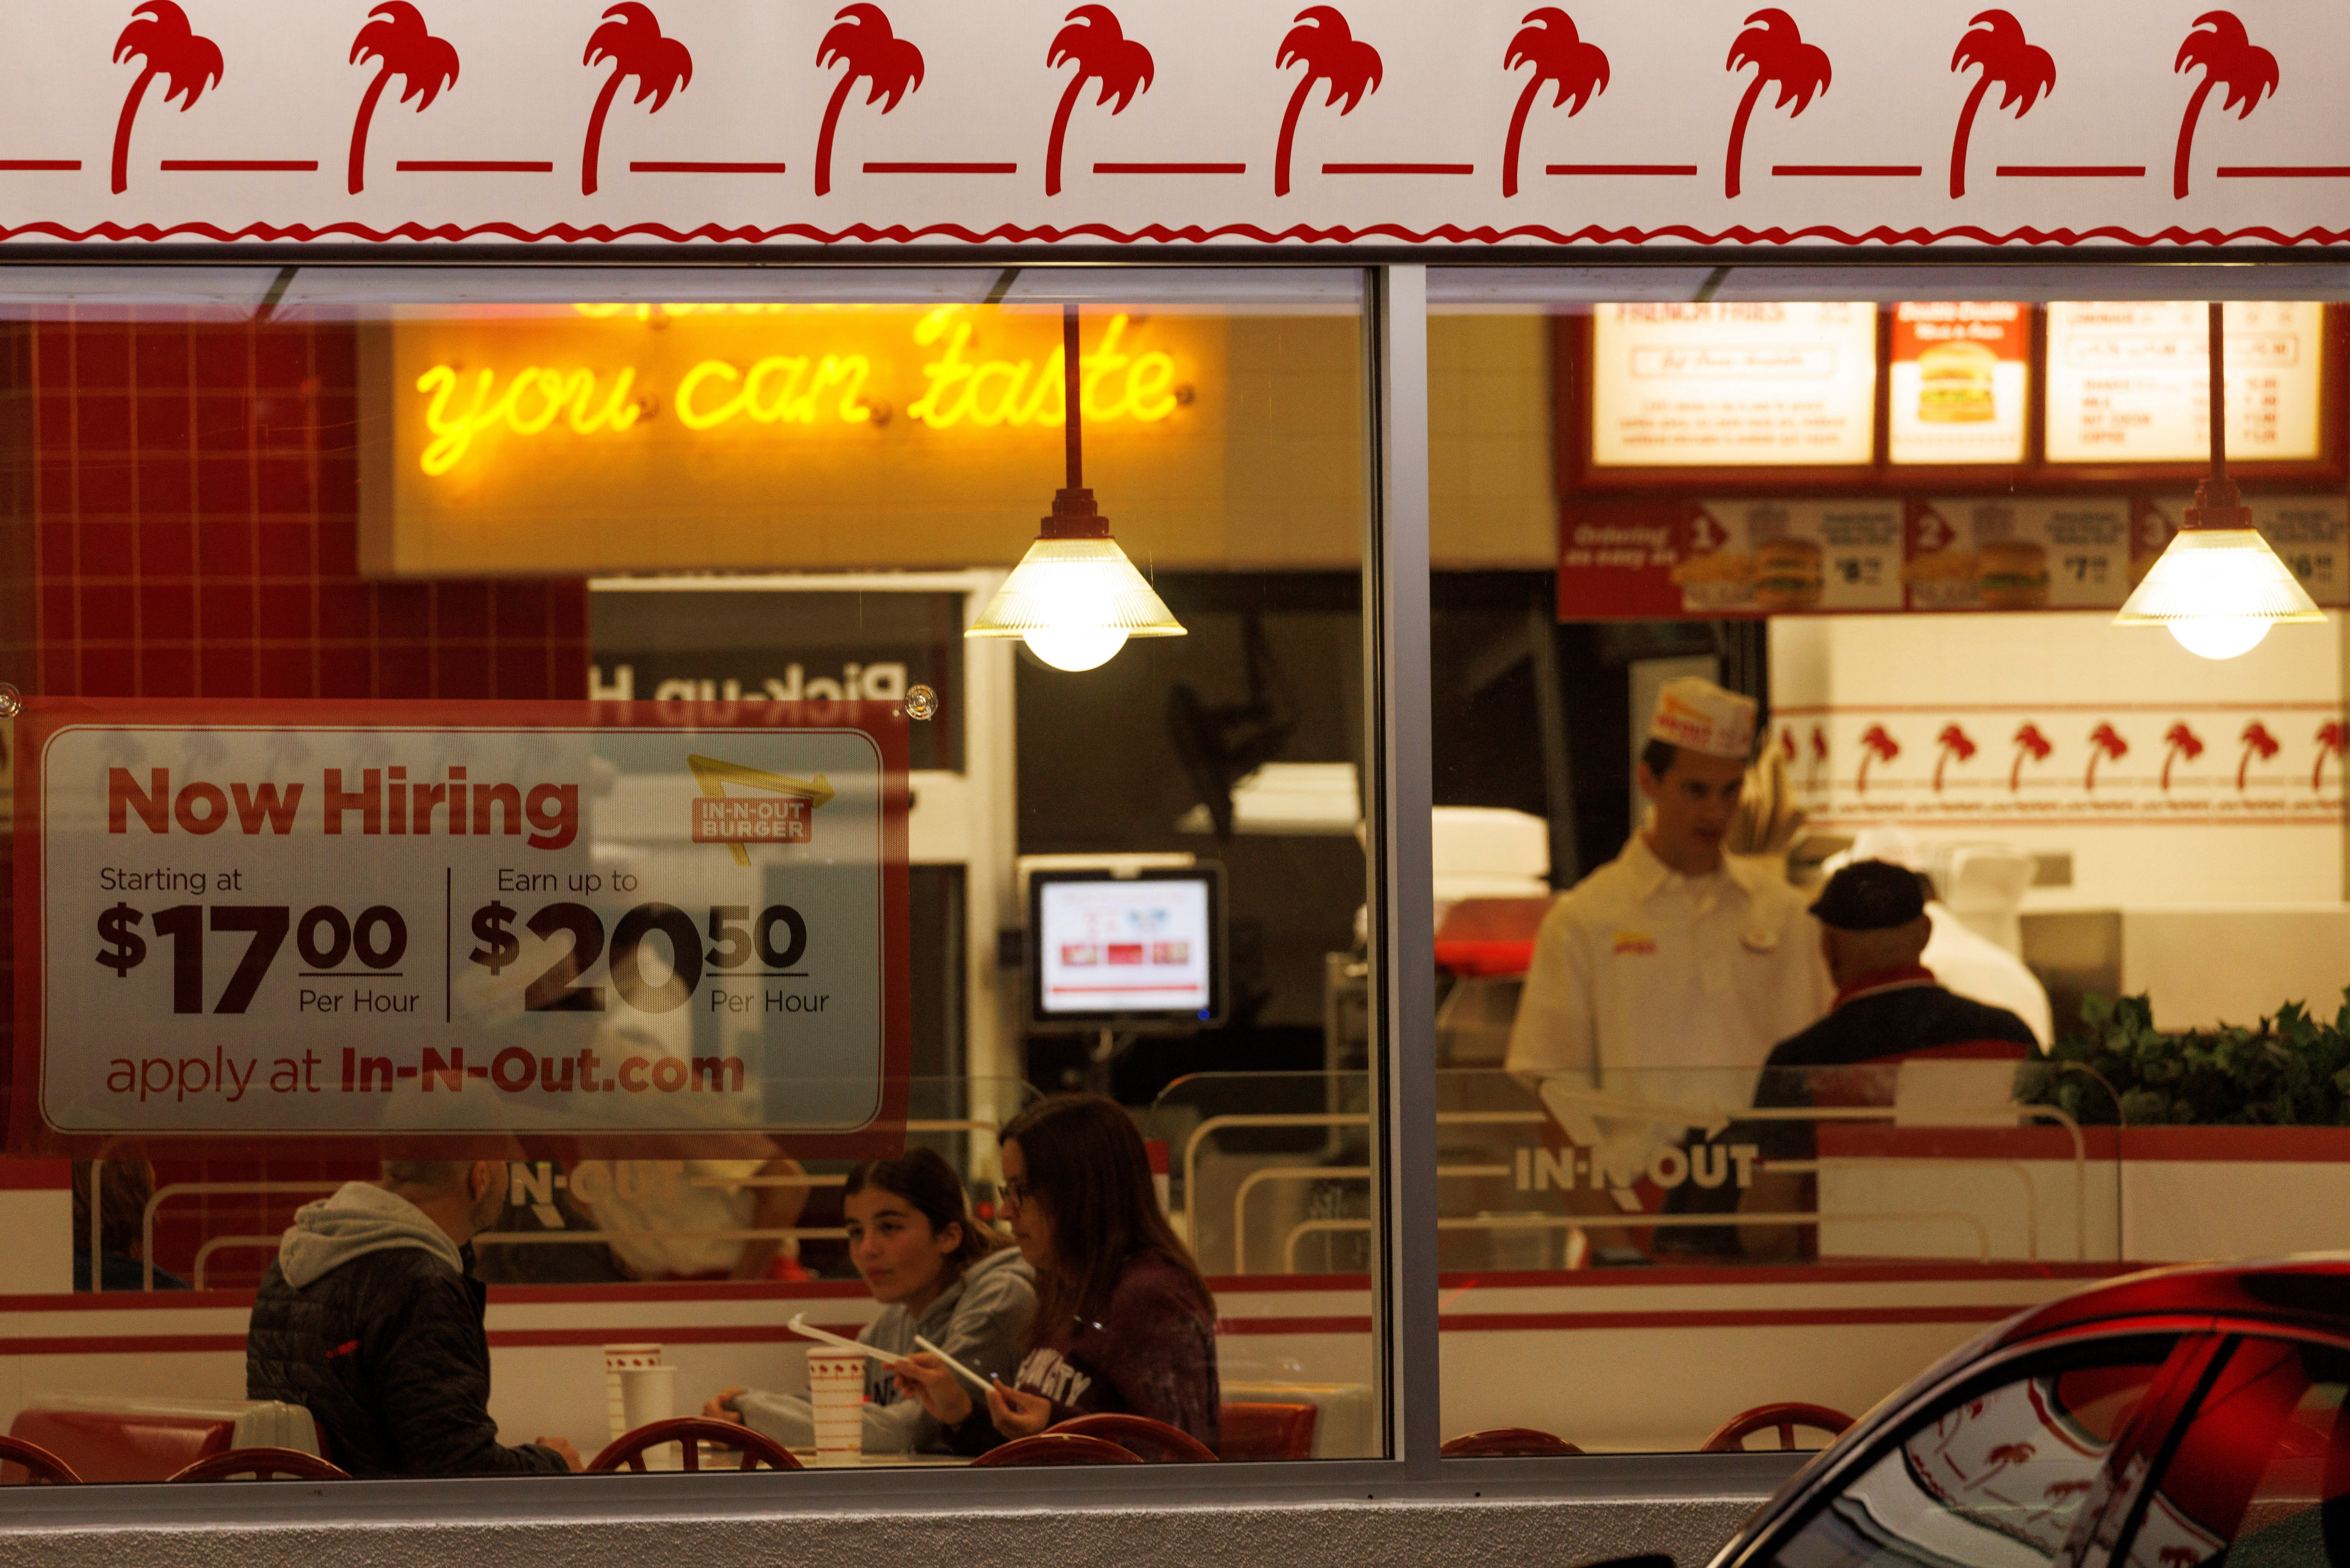 Fast food in Aventura? Better look elsewhere - Caplin News